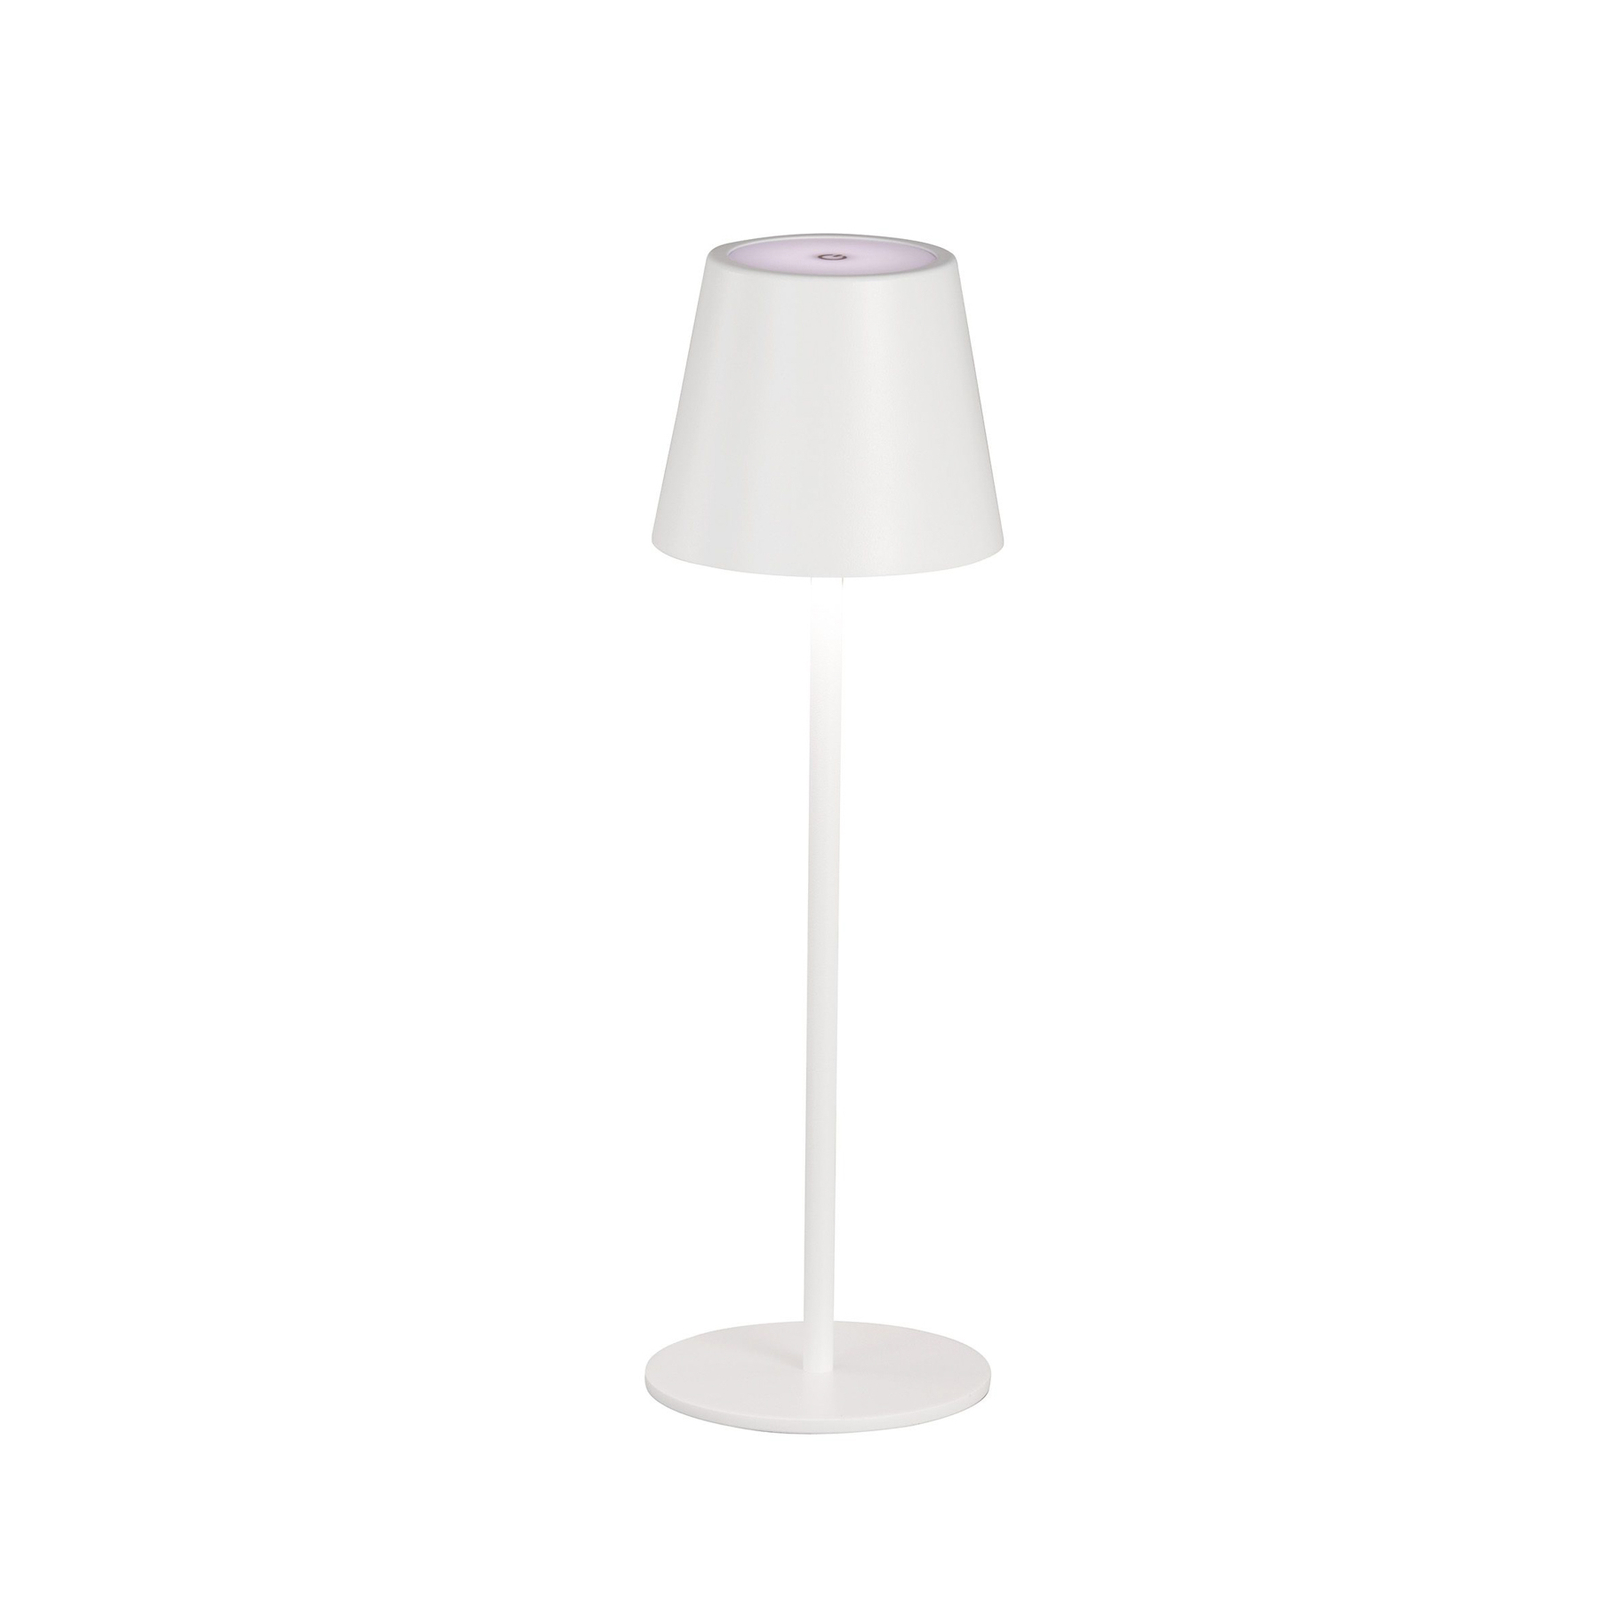 LED table lamp Viletto, white, IP54